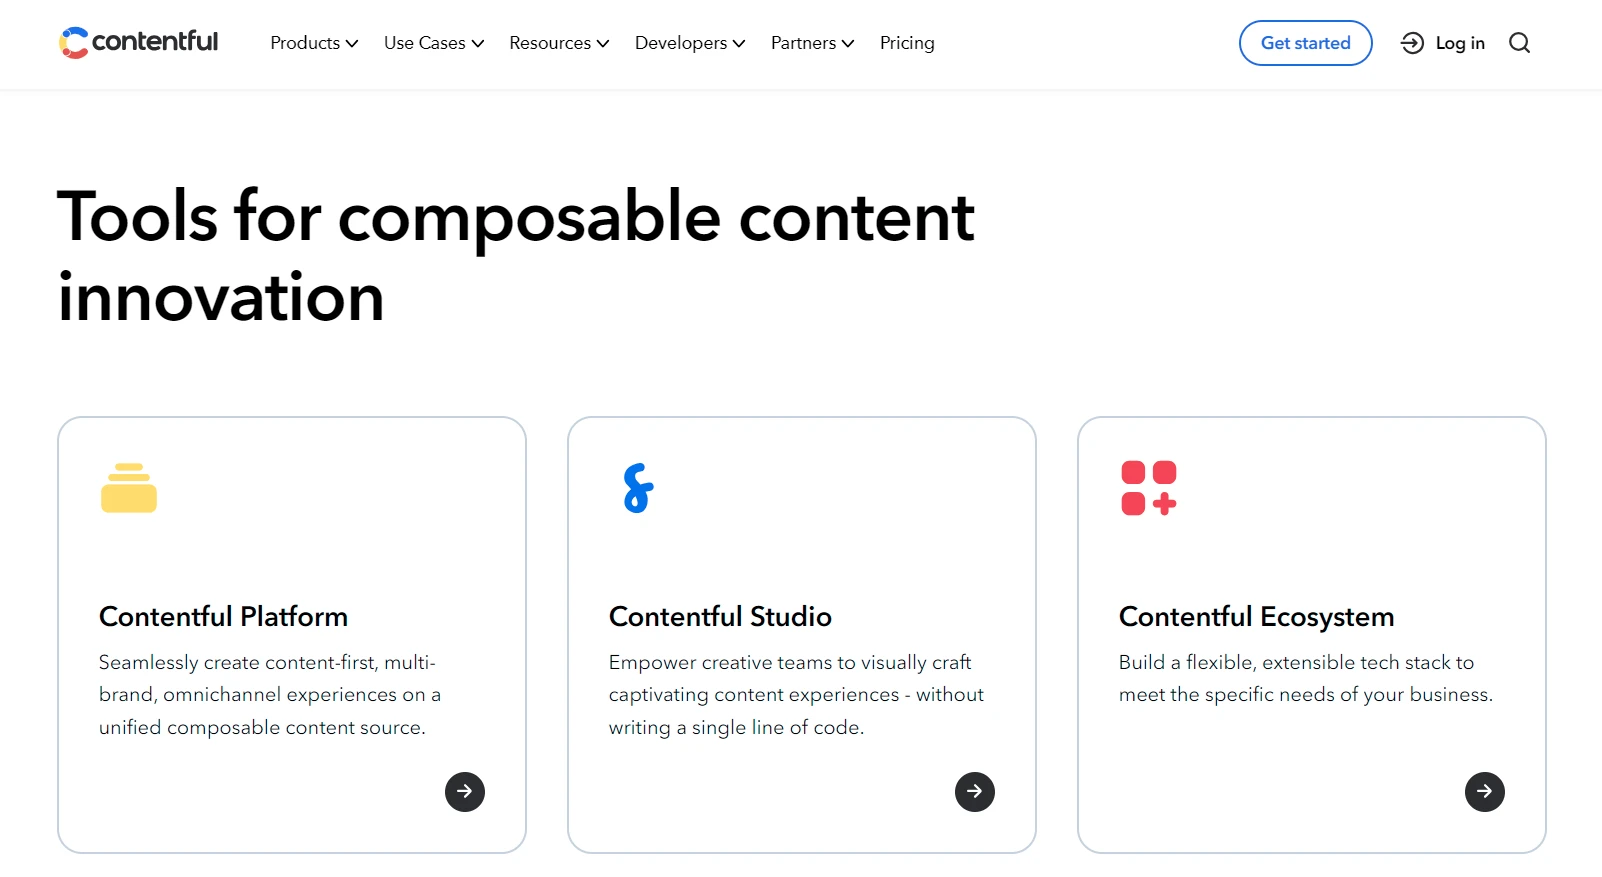 contentful website - a BigCommerce CMS alternatives